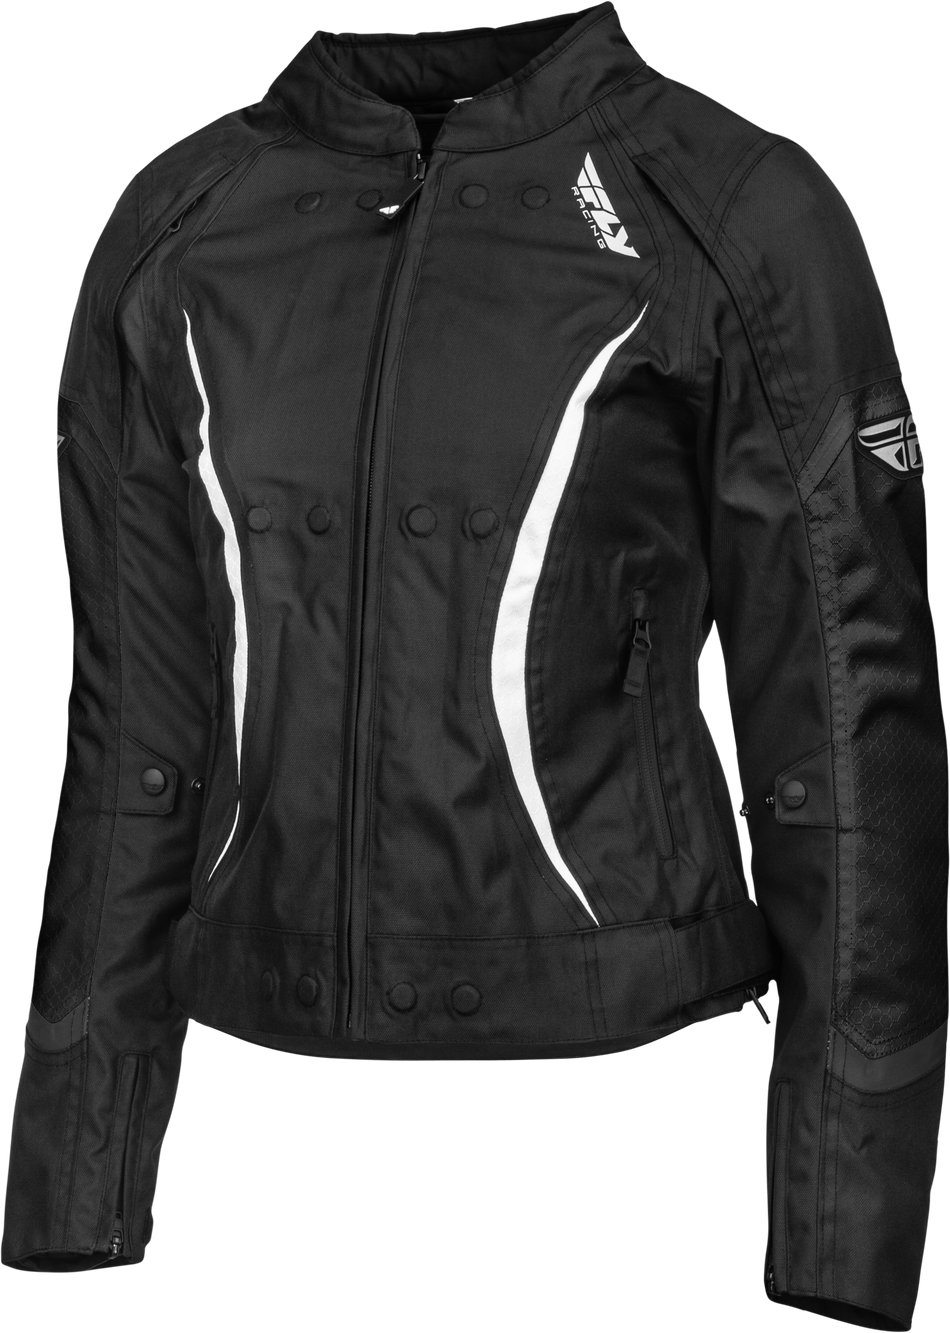 FLY RACING Women's Butane Jacket Black/White Sm 477-7042S